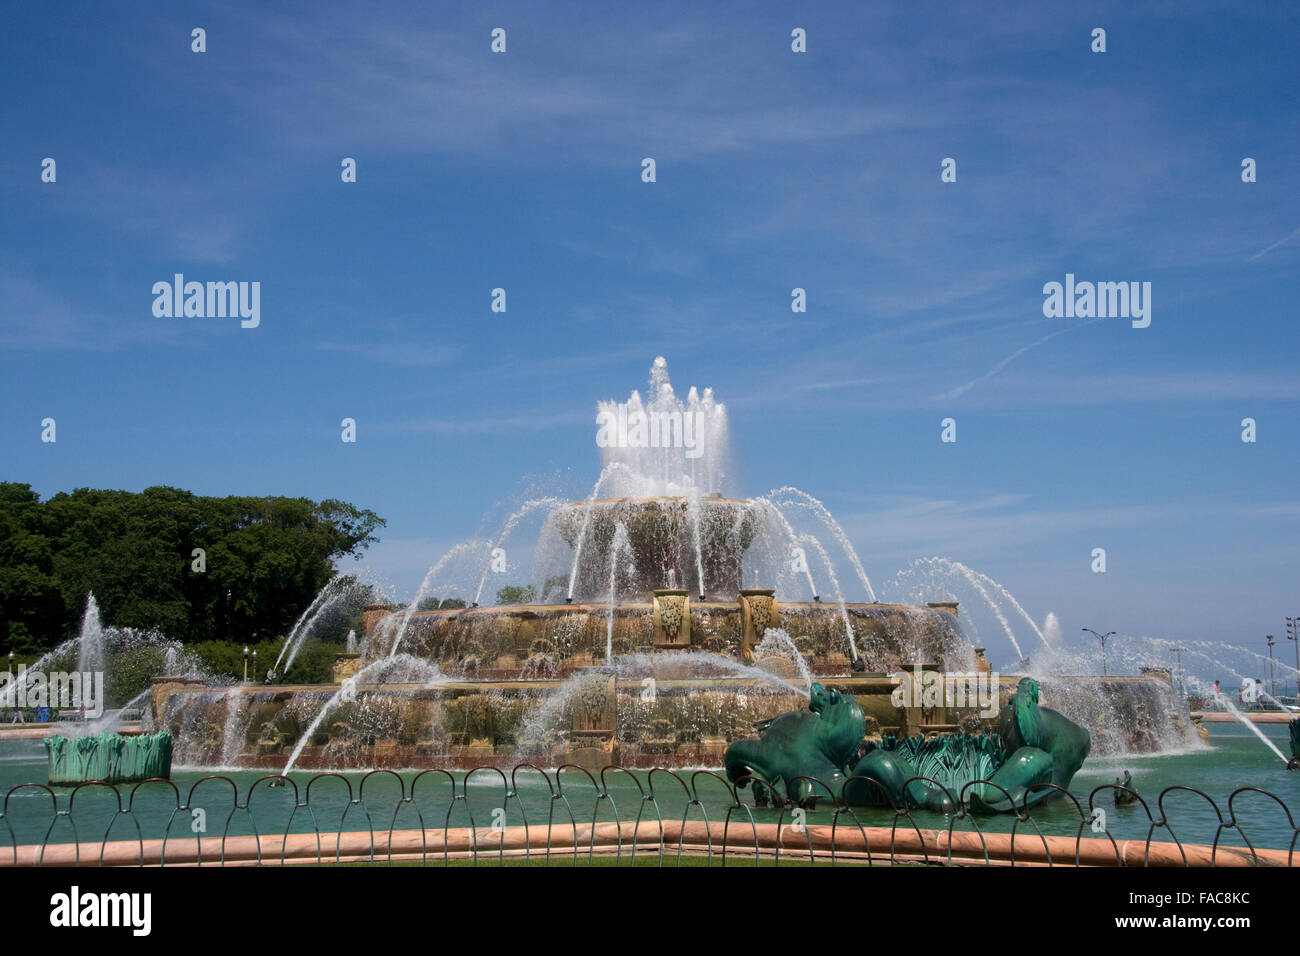 Clarence Buckingham Memorial Fountain. Chicago. Stockfoto